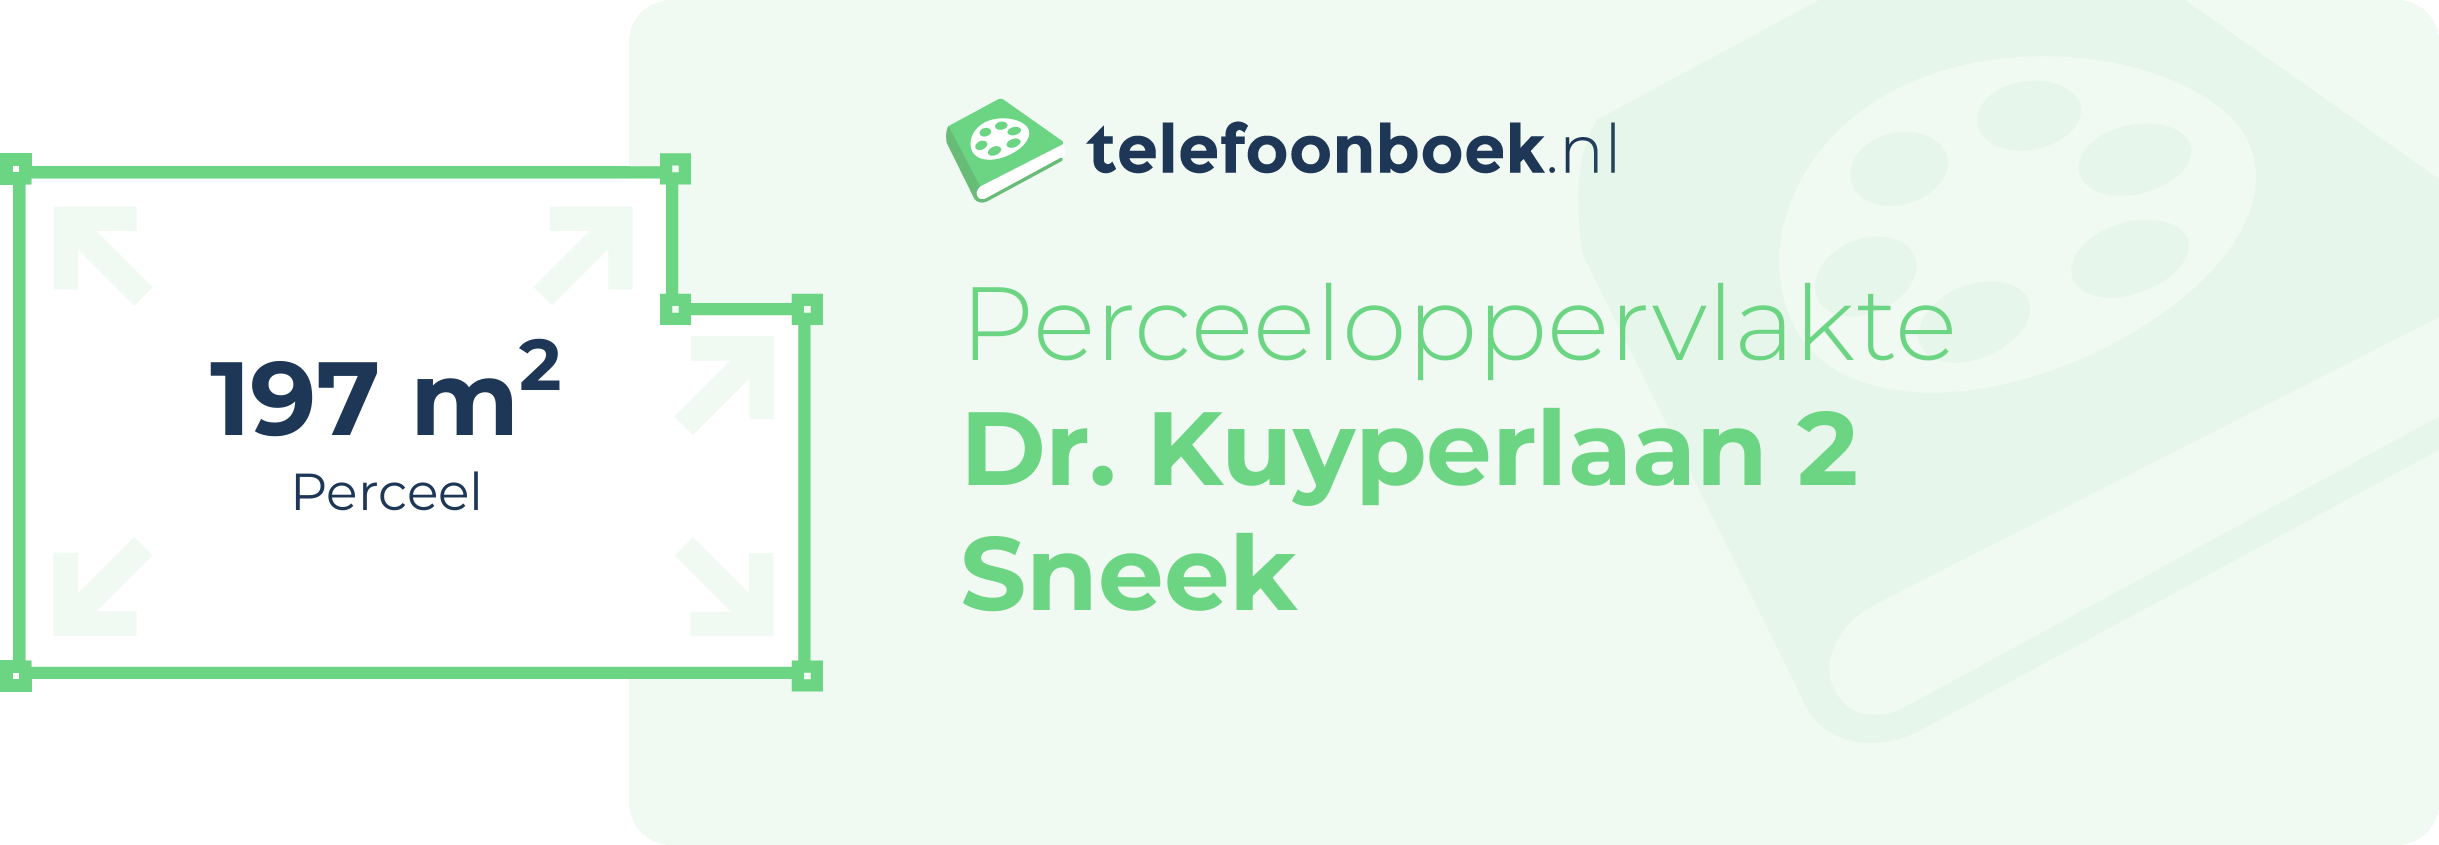 Perceeloppervlakte Dr. Kuyperlaan 2 Sneek